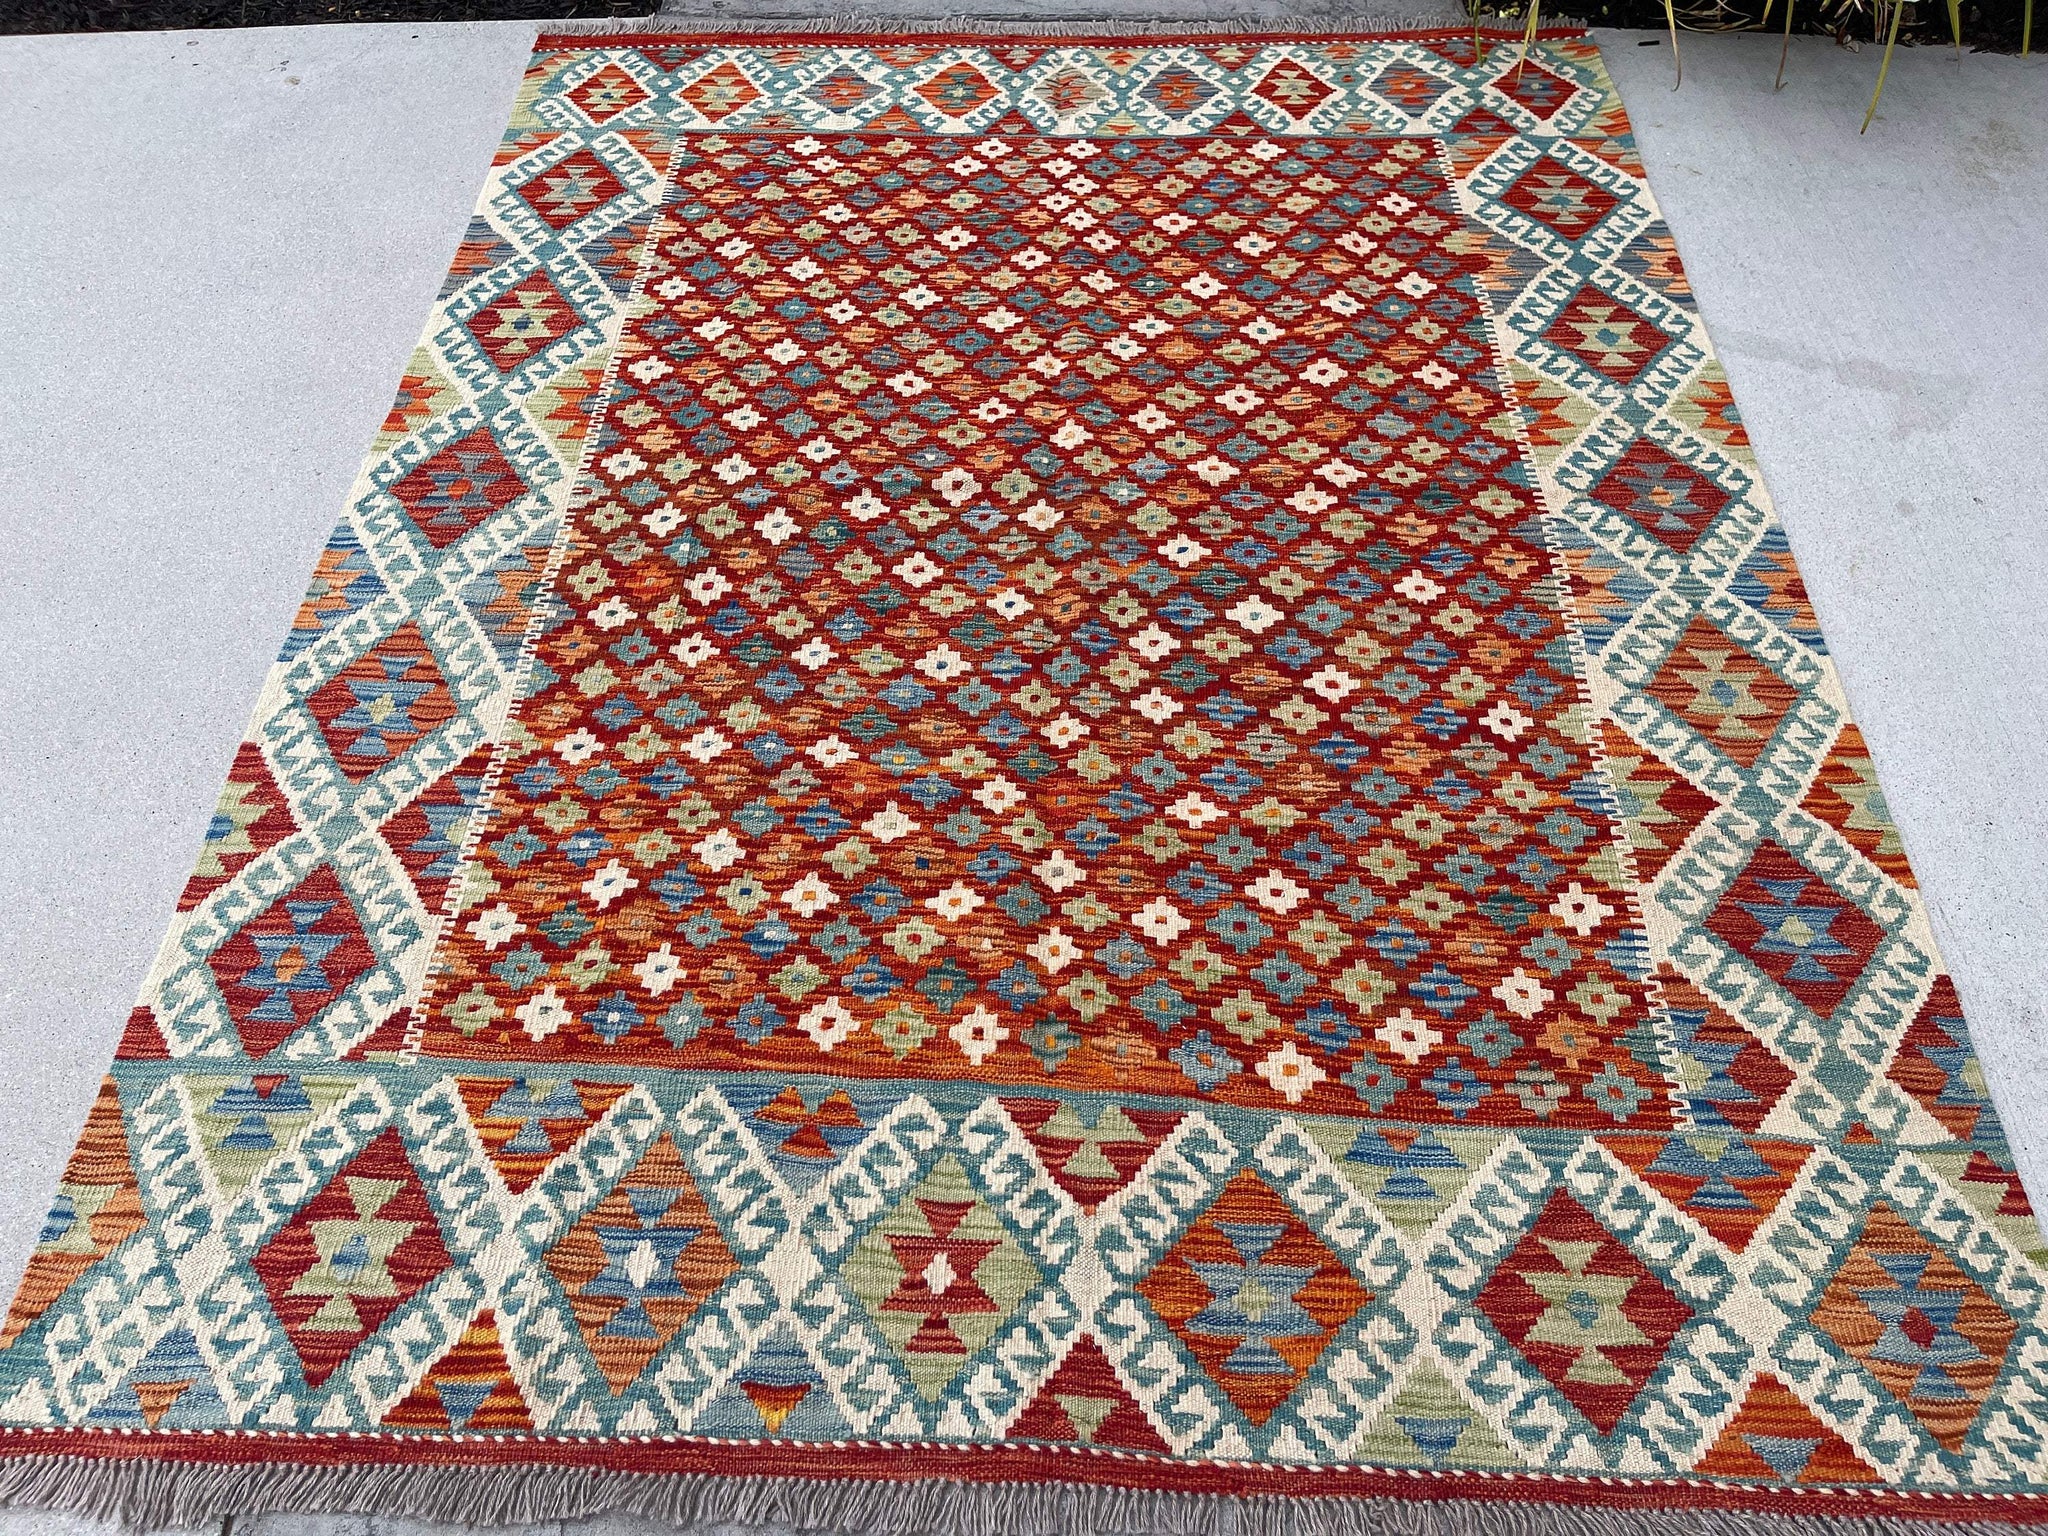 5x7 (150x200) Handmade Kilim Afghan Rug | Teal Burnt Orange Ivory Cream Blue Sage | Flat Weave Flatweave Tribal Nomadic Turkish Moroccan